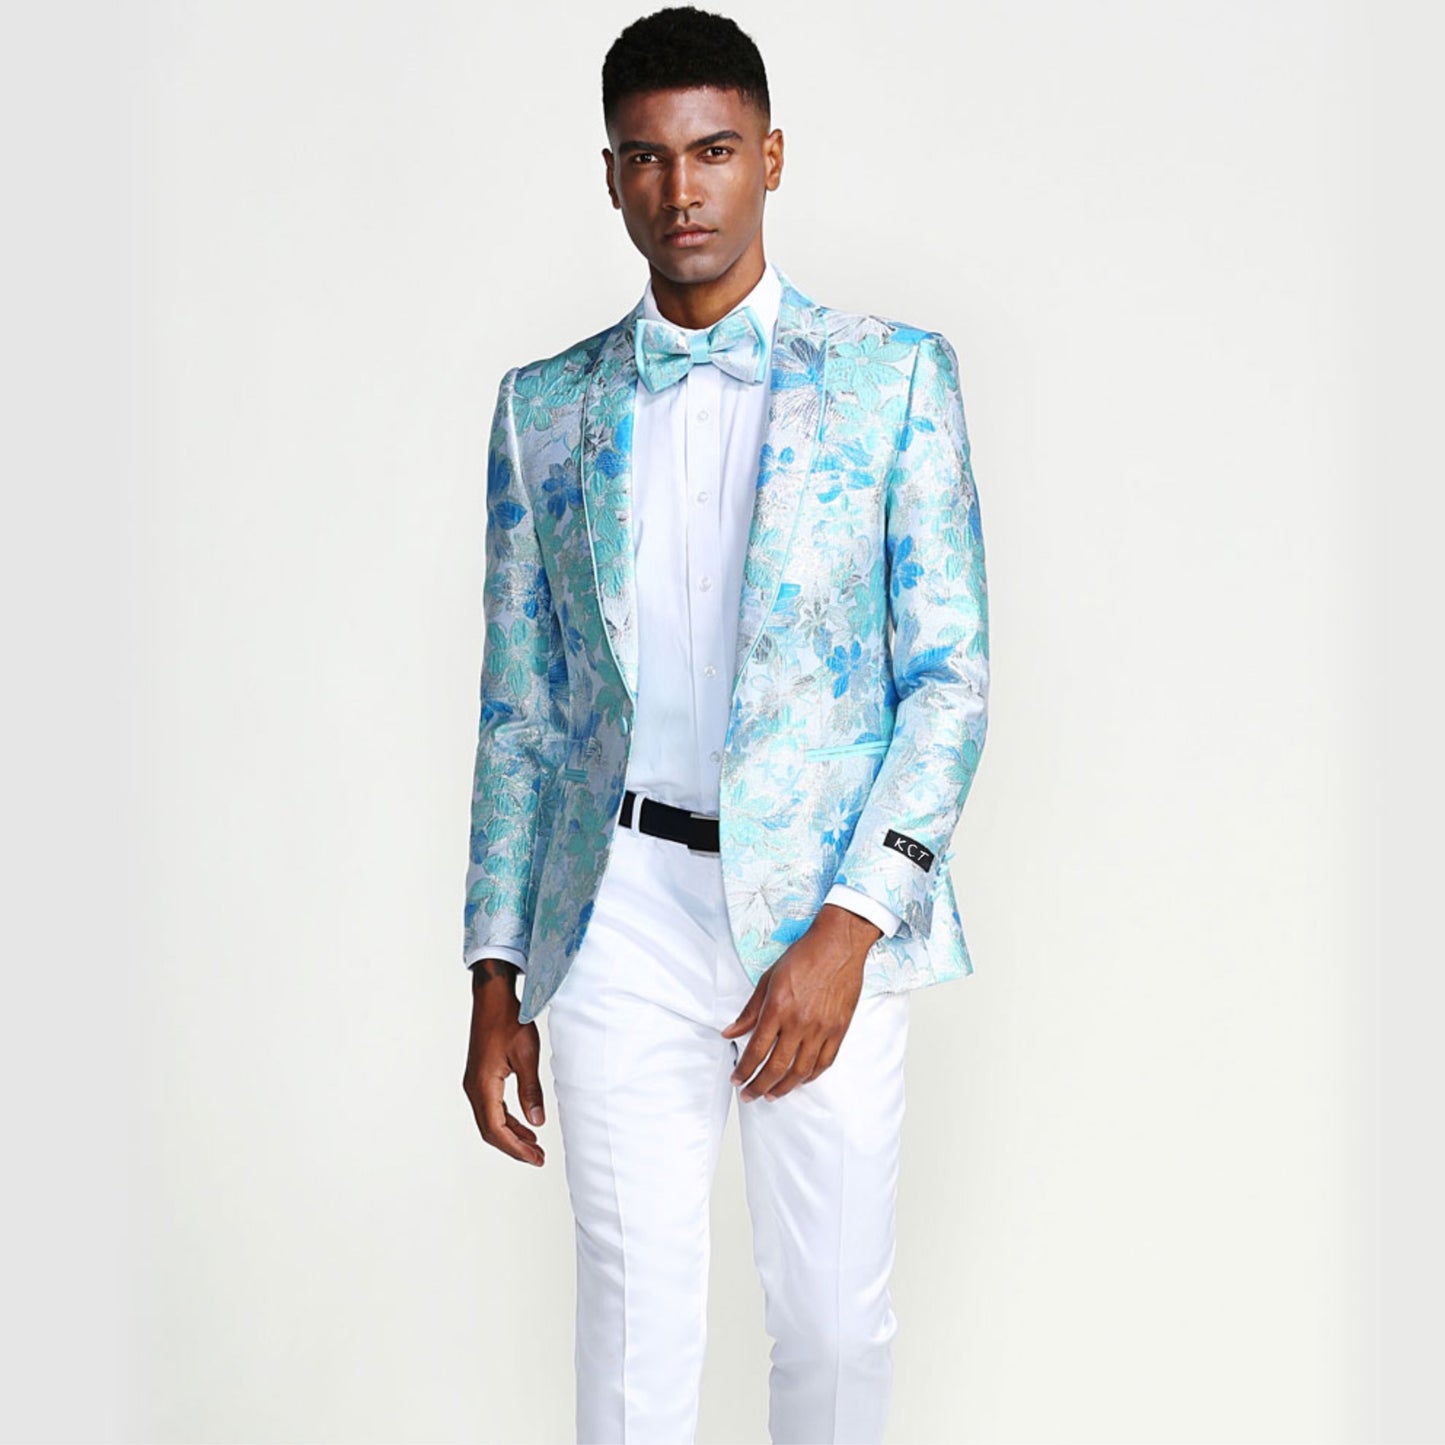 KCT Menswear - Men's Aqua Floral Blazer for Prom